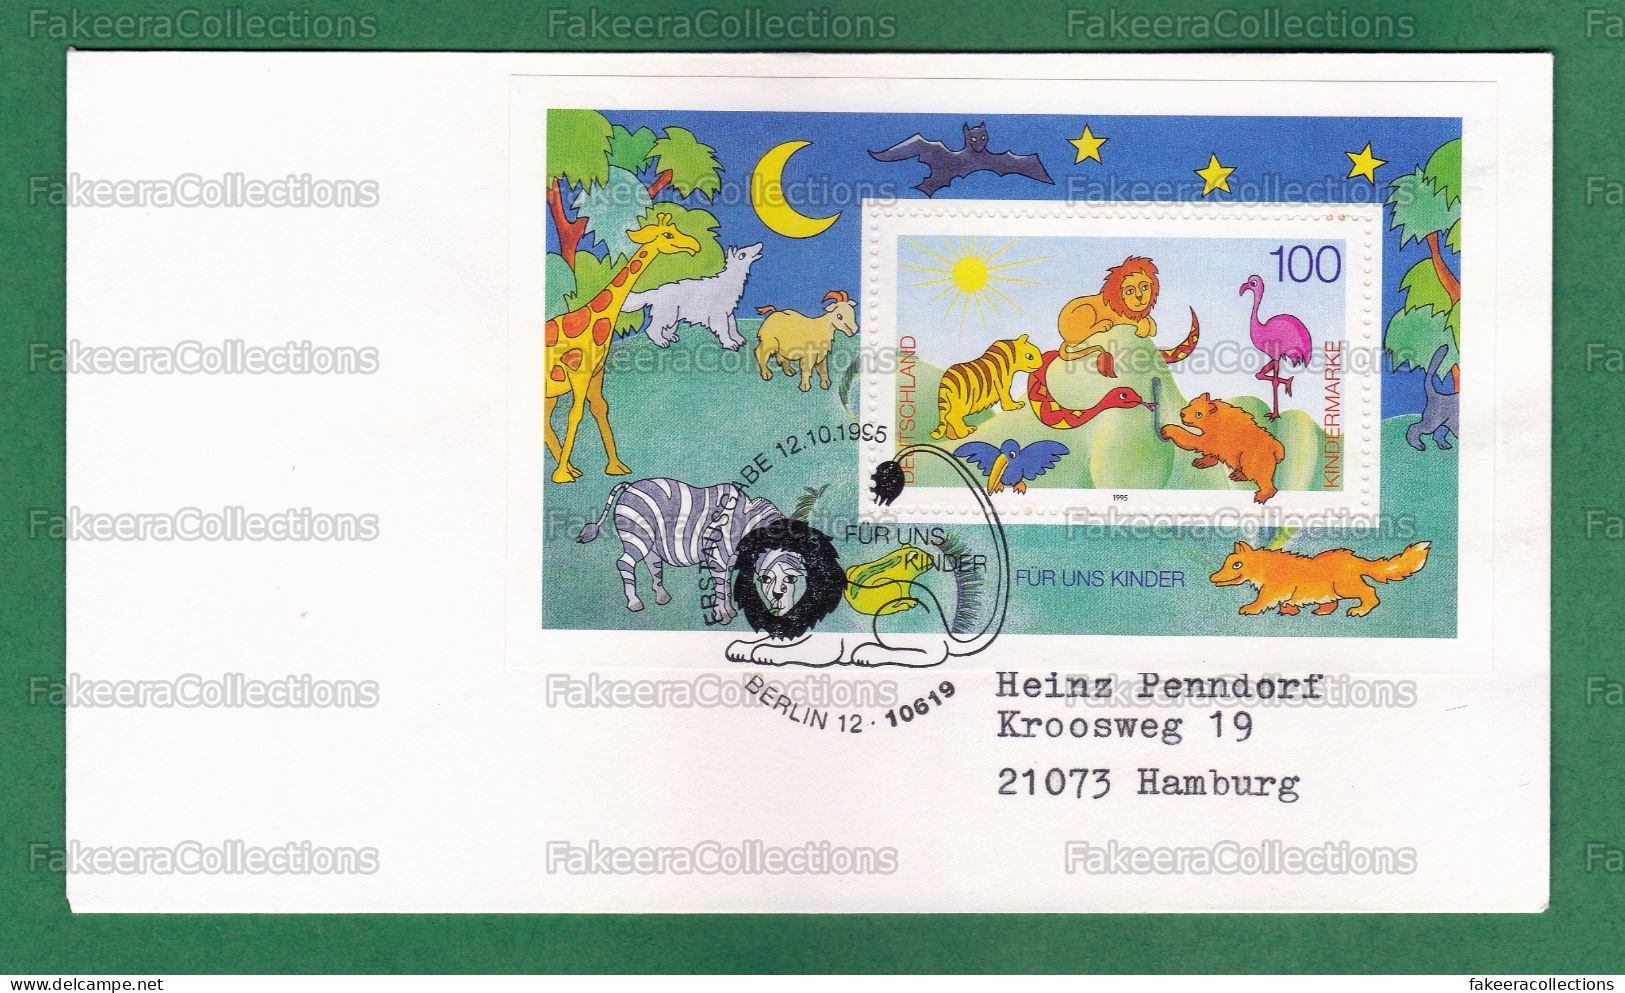 GERMANY 1995 - FOR THE CHILDREN 1v M/S FDC - Postal Used On Date Of Issue - Animals, TIGER, LION, SNAKE, BEAR, BIRDS - Raubkatzen